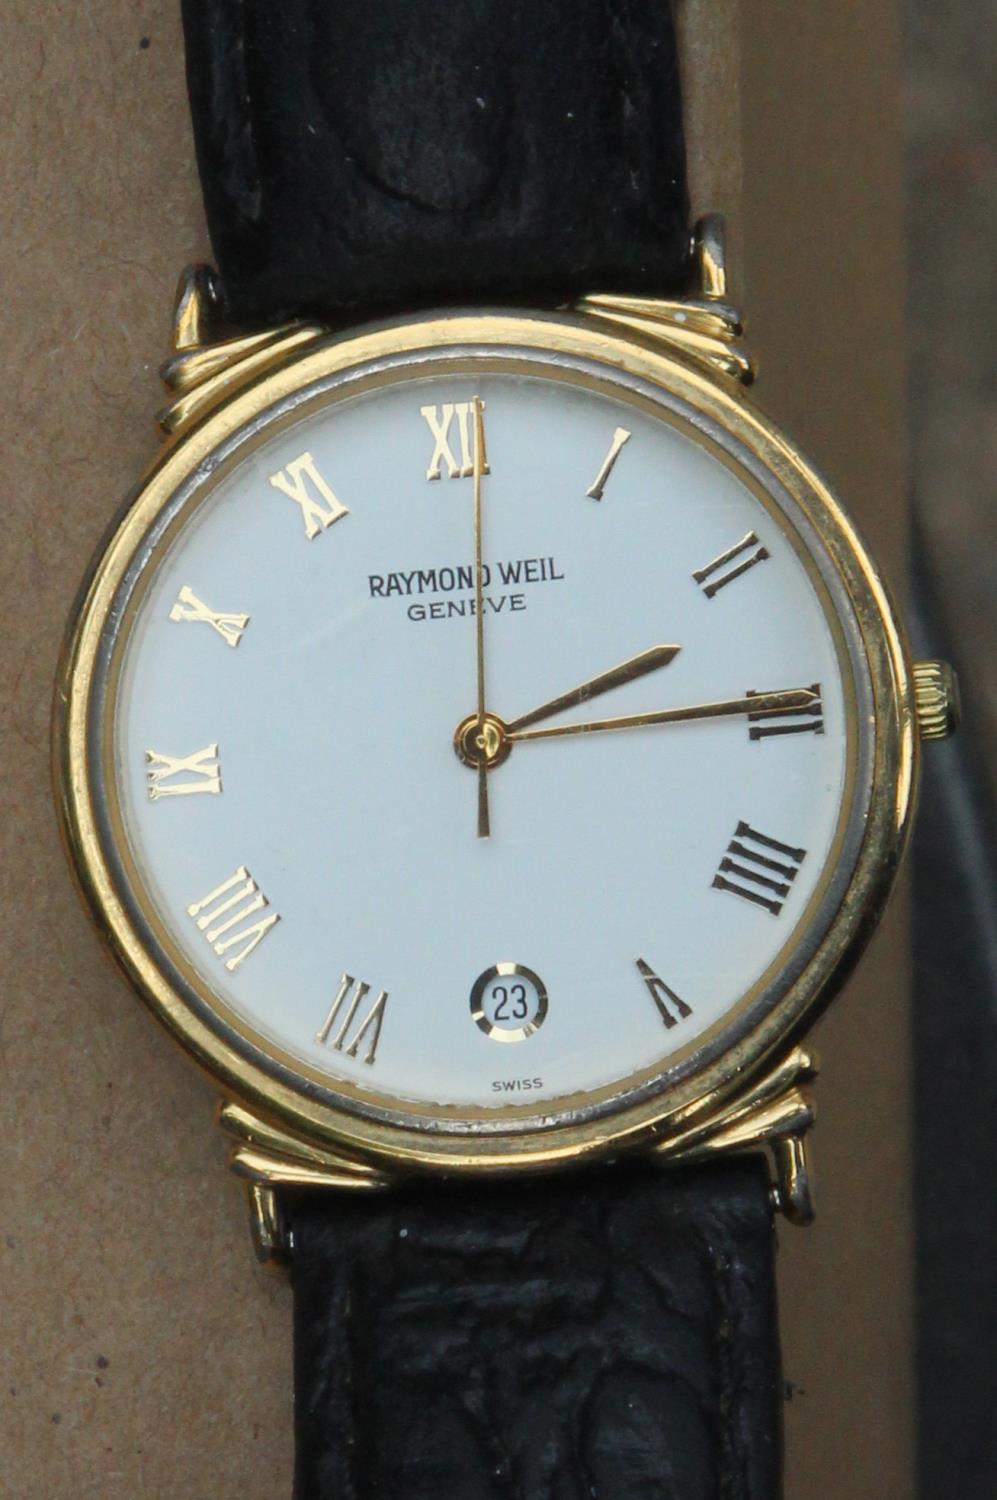 Raymond Weil 18k Gold Plated Mens Watch Model 5542. Raymond Weil model 5542 gold plated Swiss